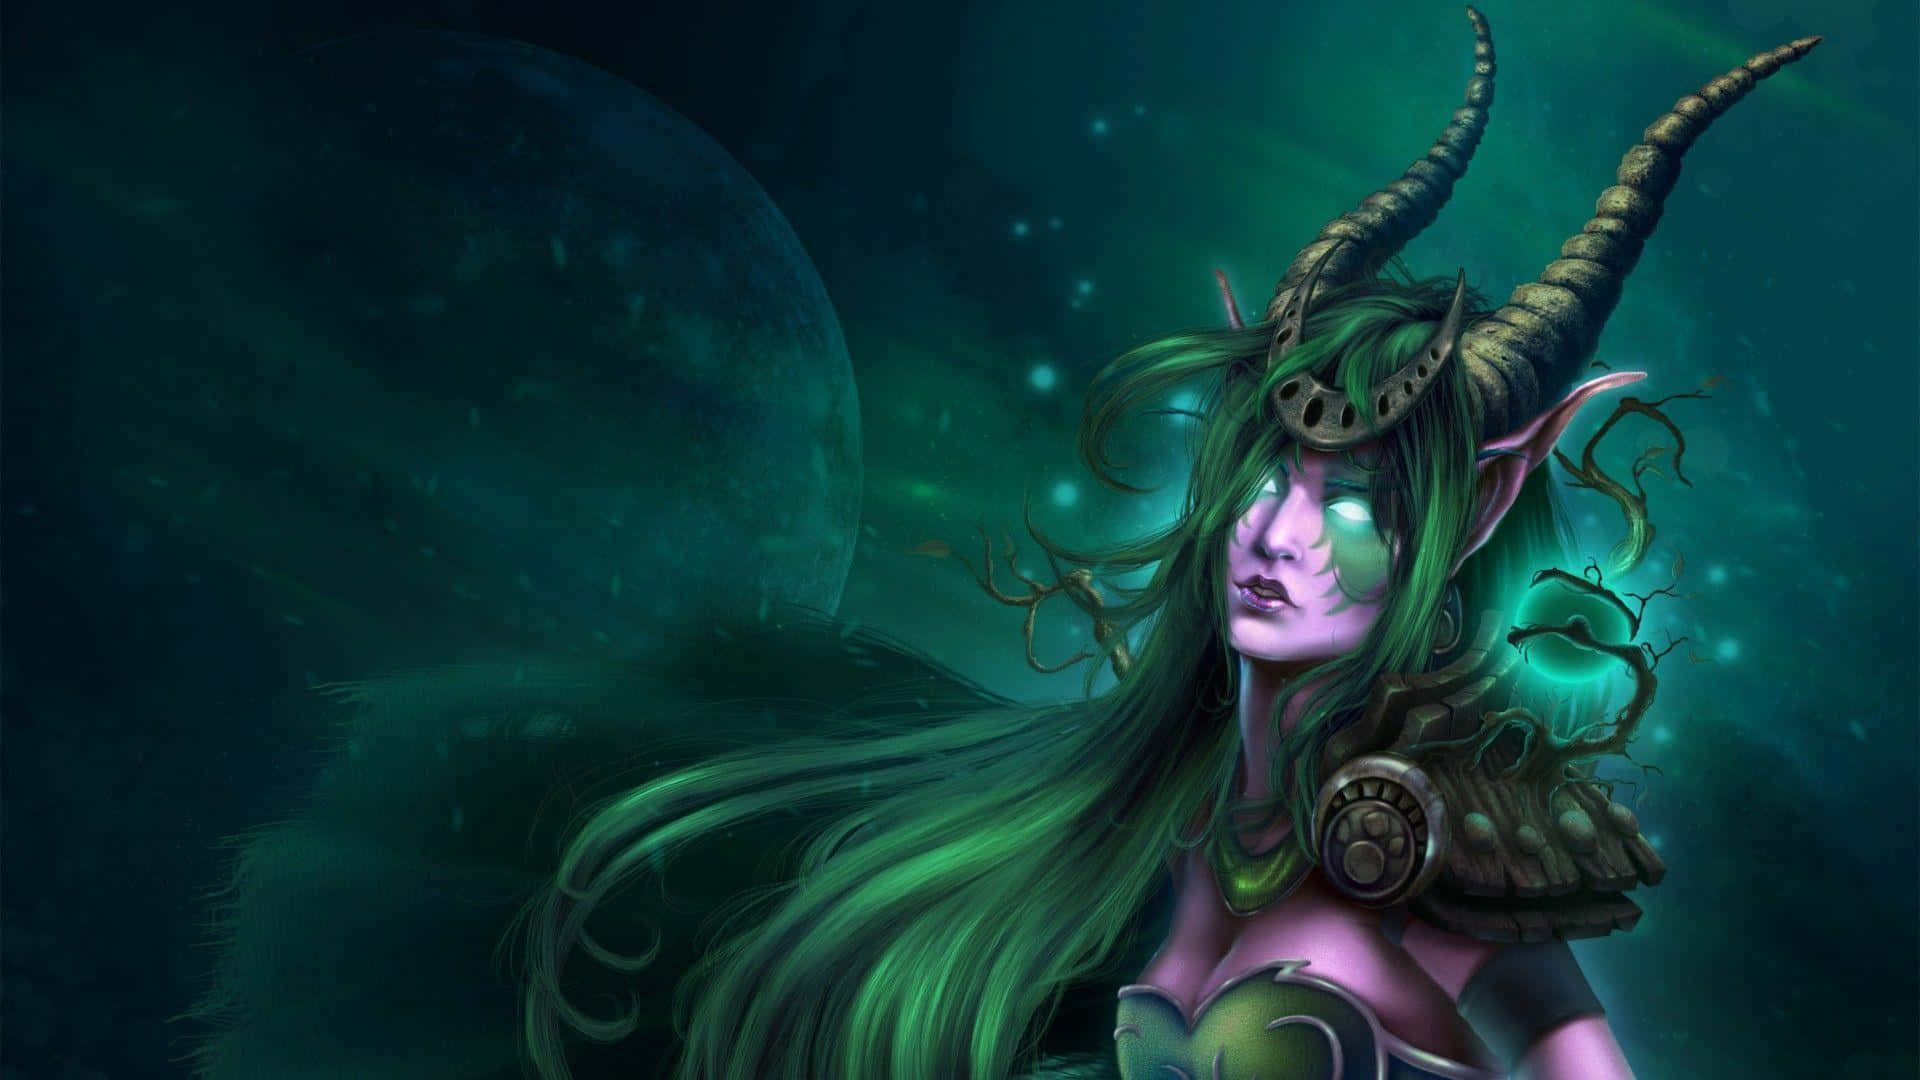 Majestic World Of Warcraft Druid In A Stunning Fantasy Landscape Wallpaper